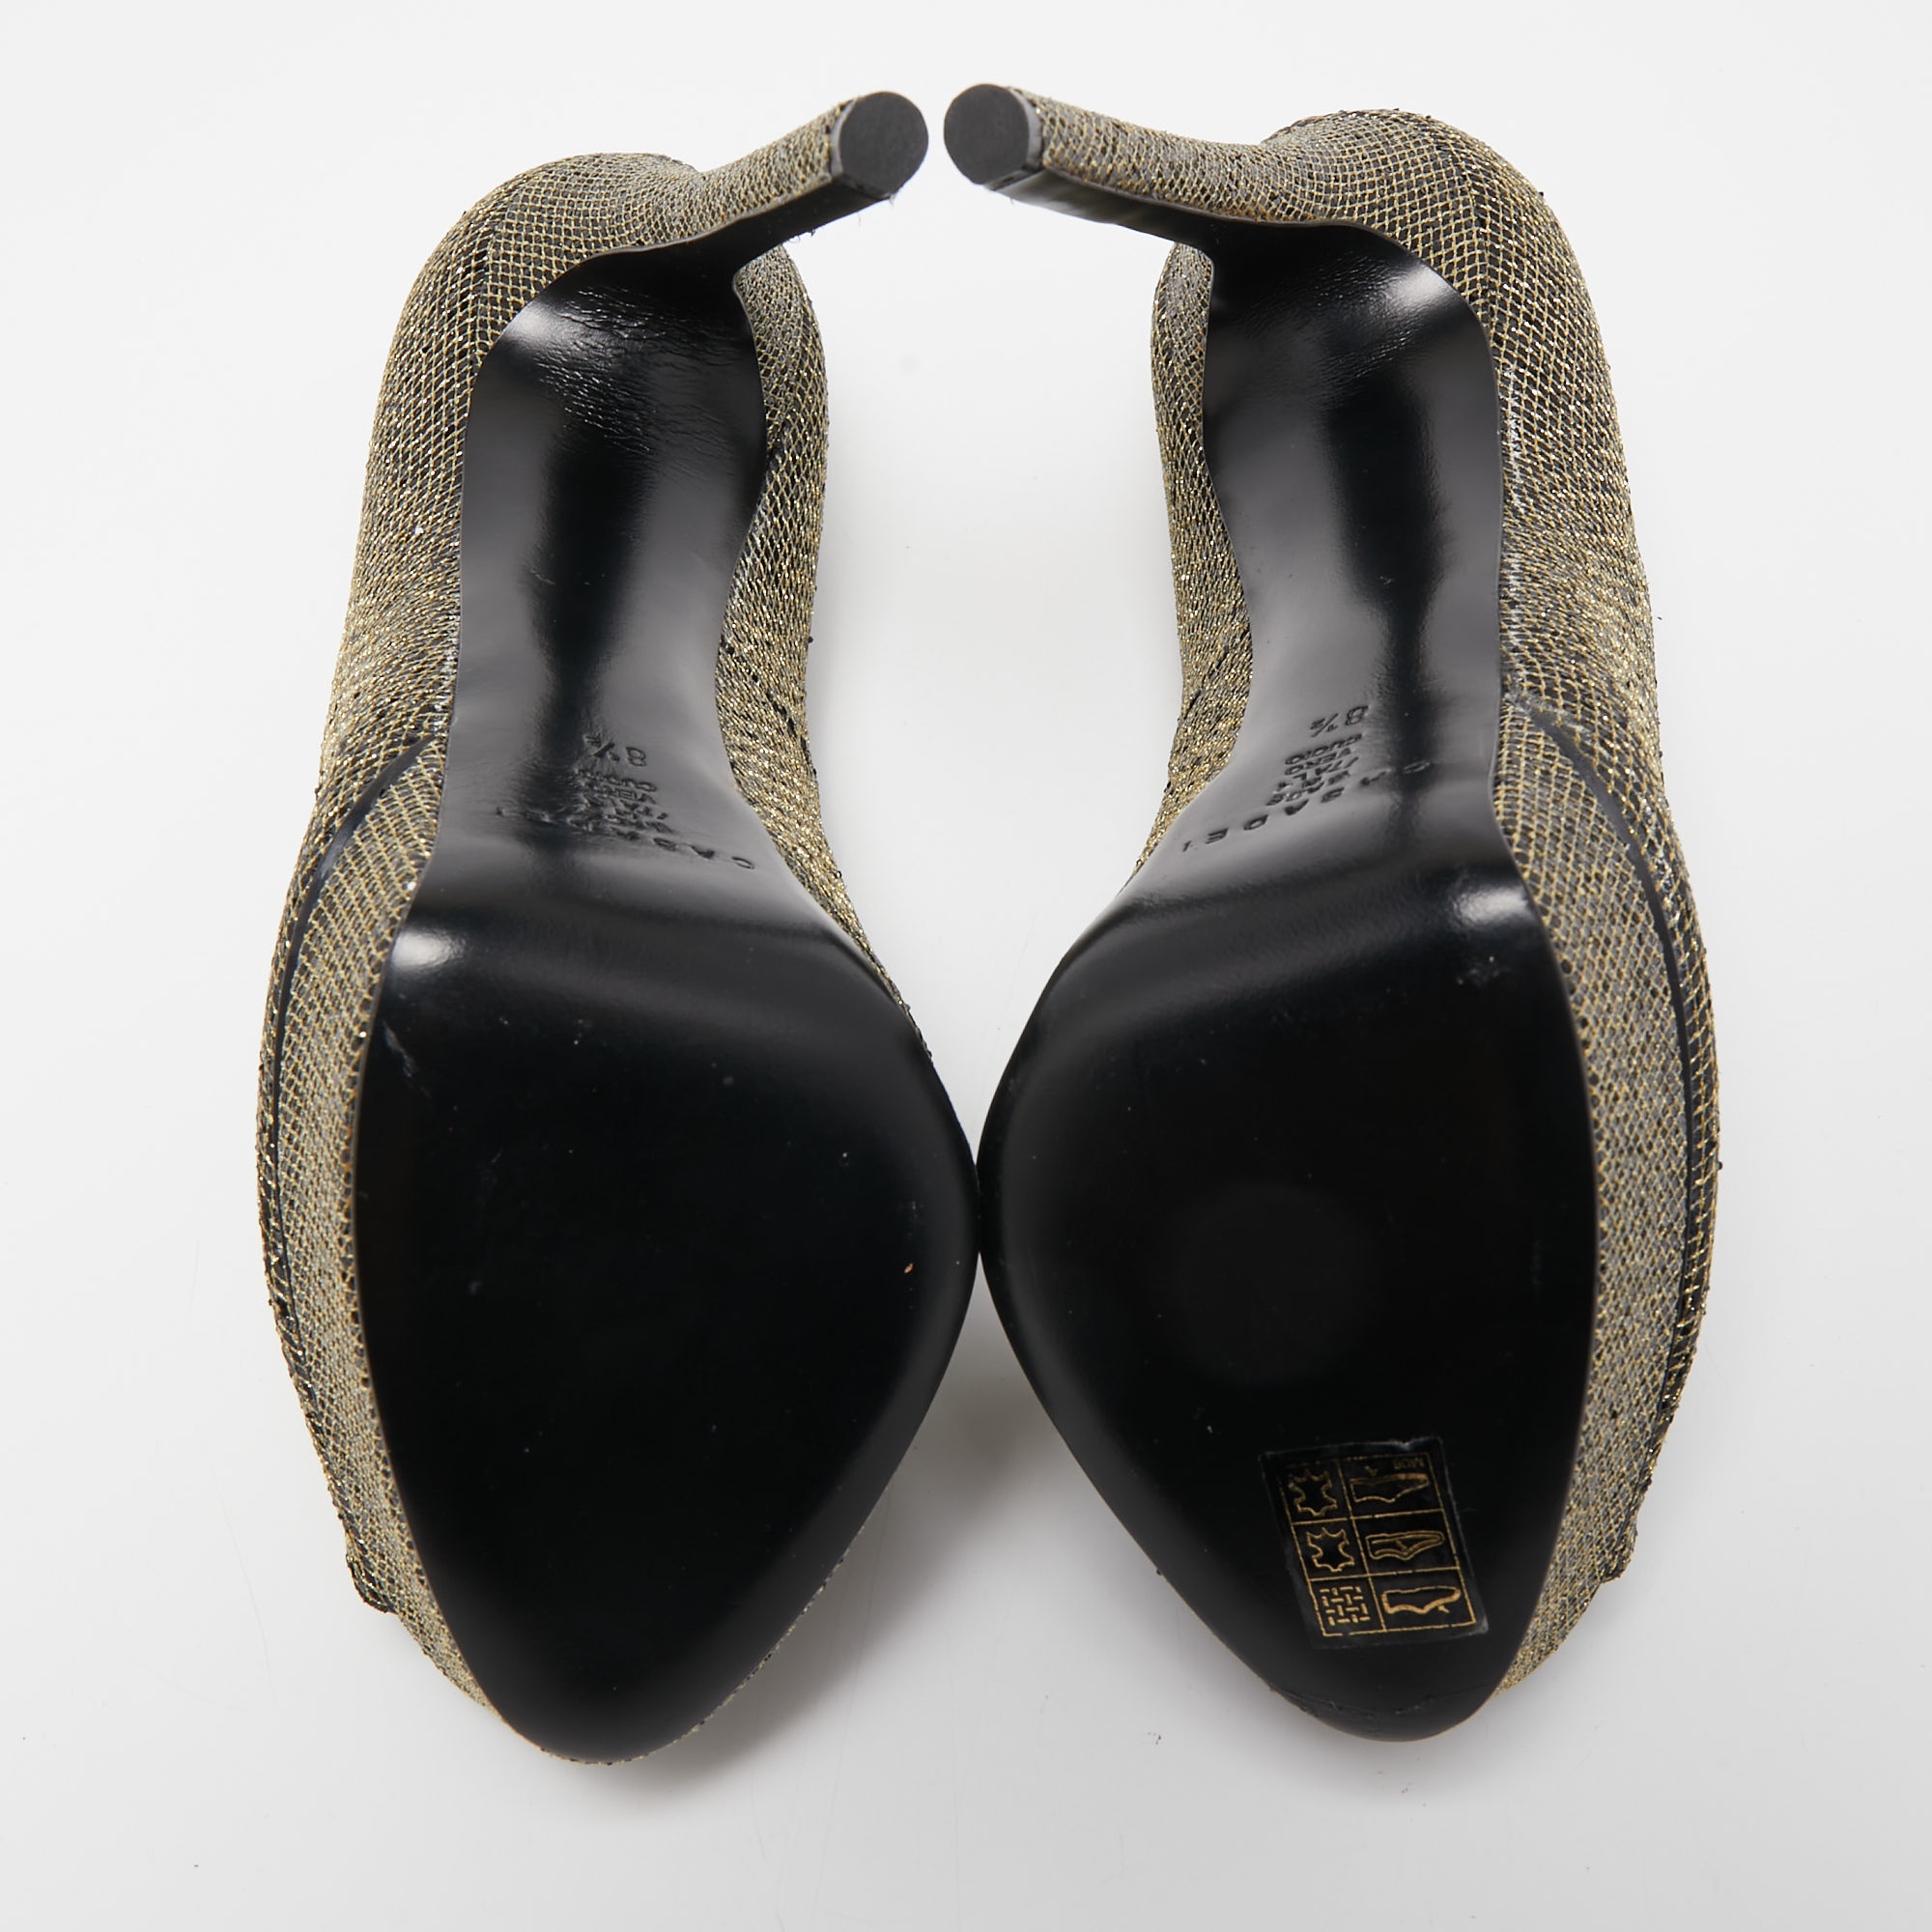 Casadei Gold/Black Lurex Fabric Peep Toe Platform Pumps Size 38.5